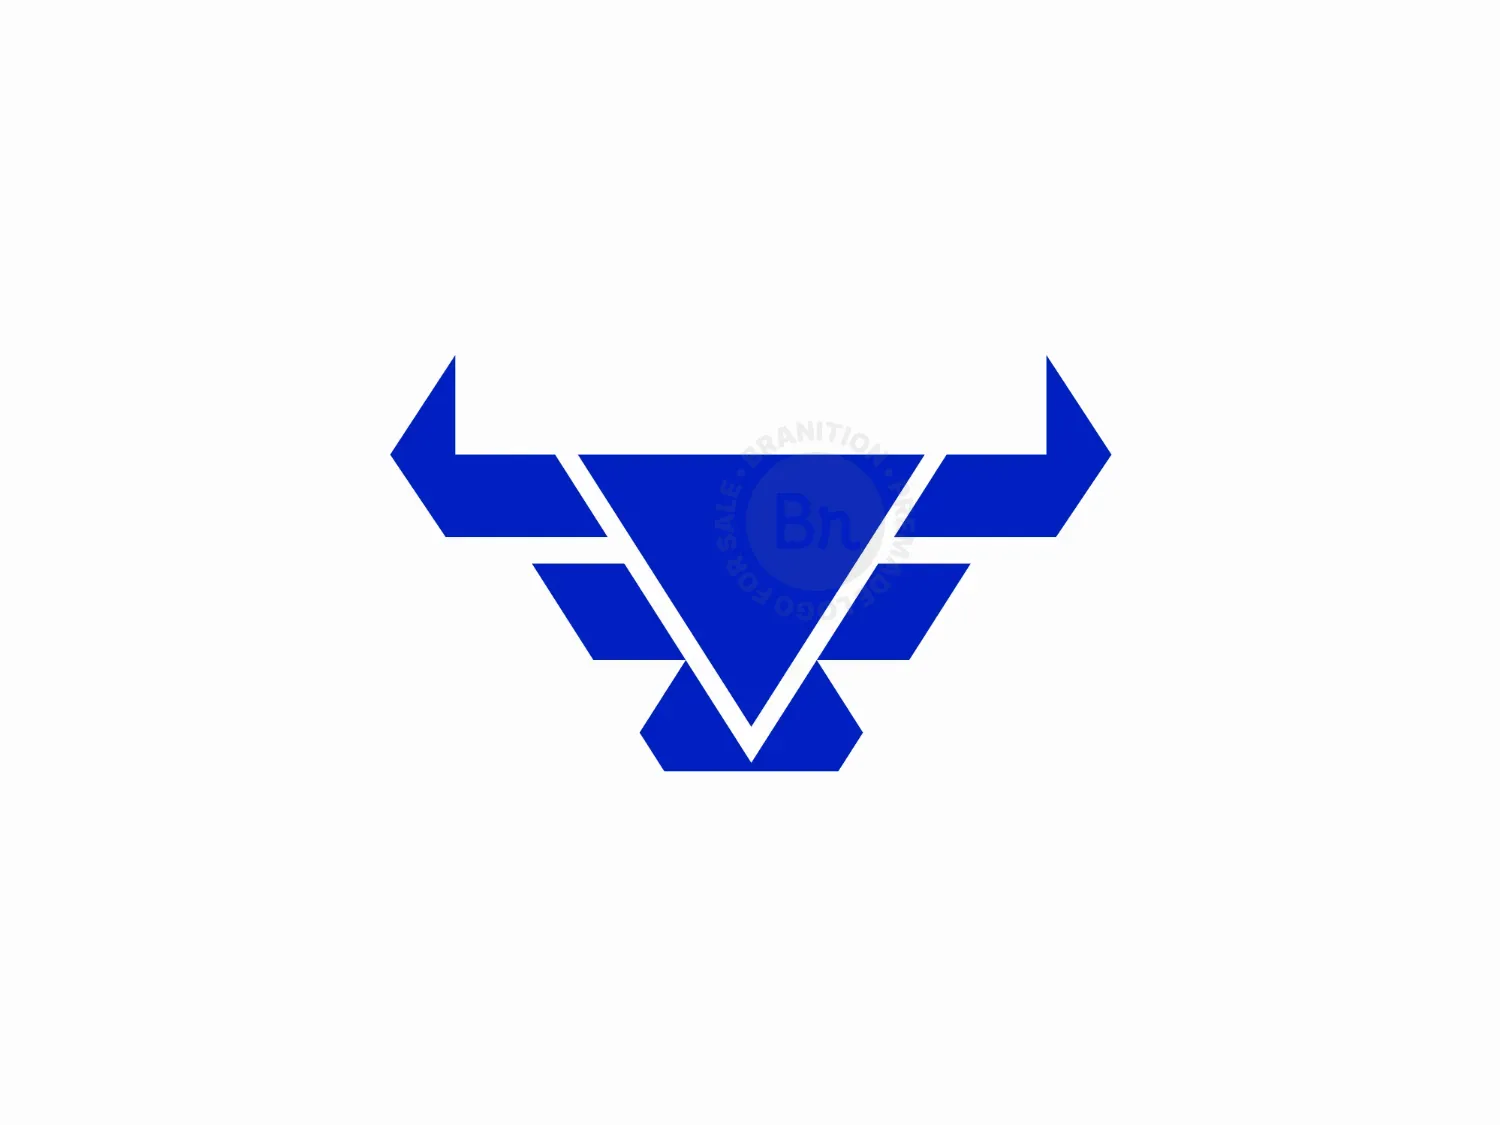 Geometric Bull Logo